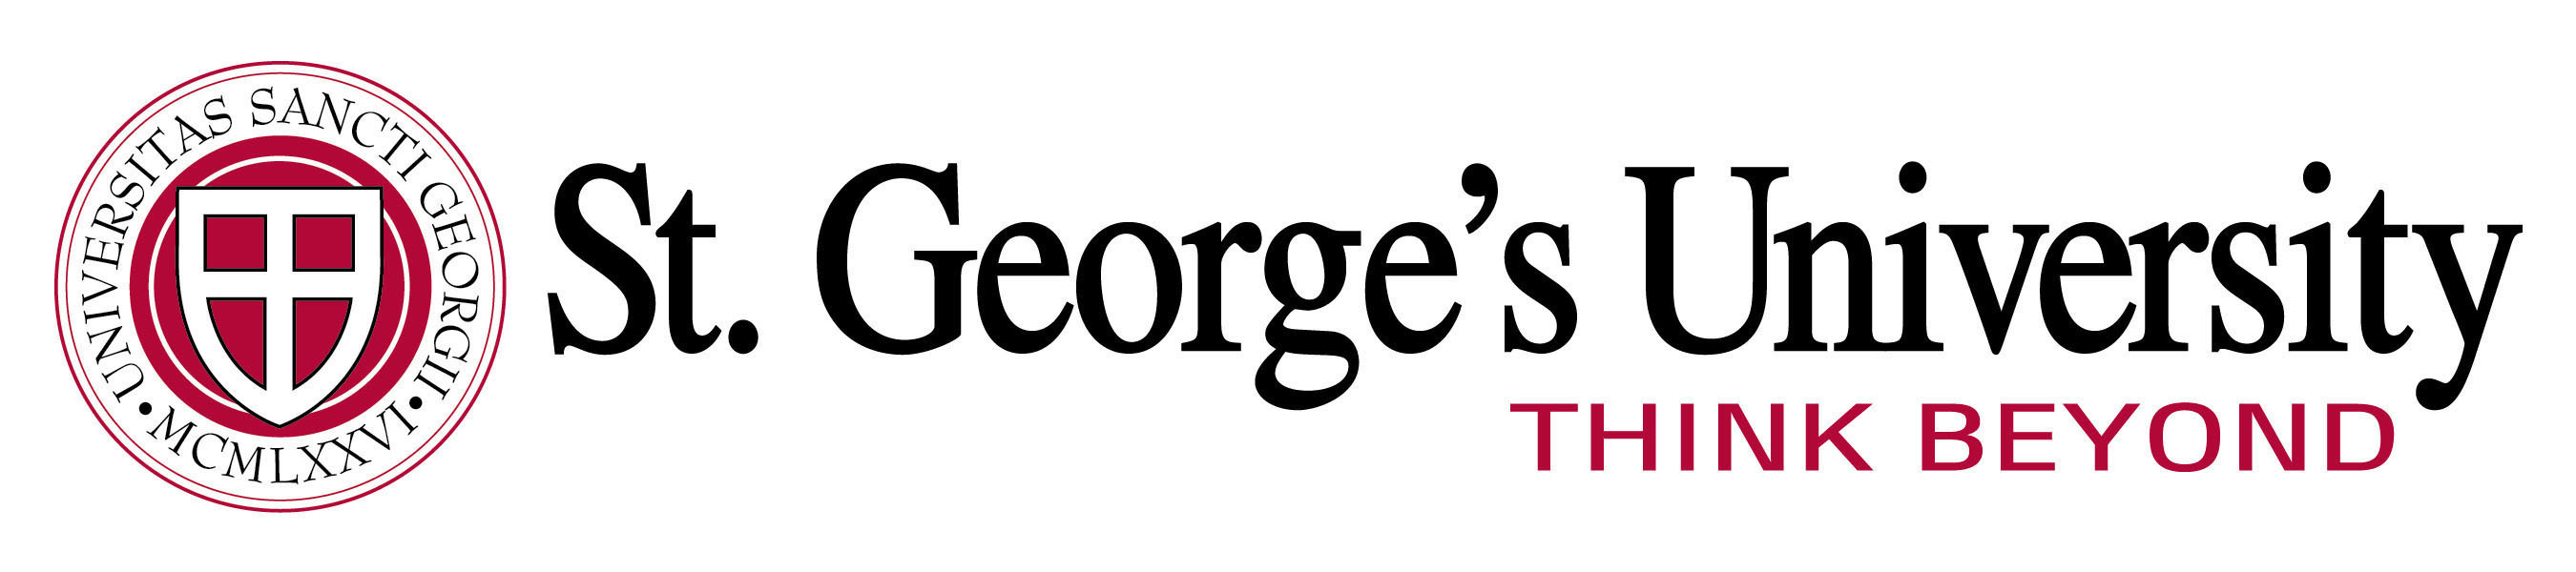 St. George's University.